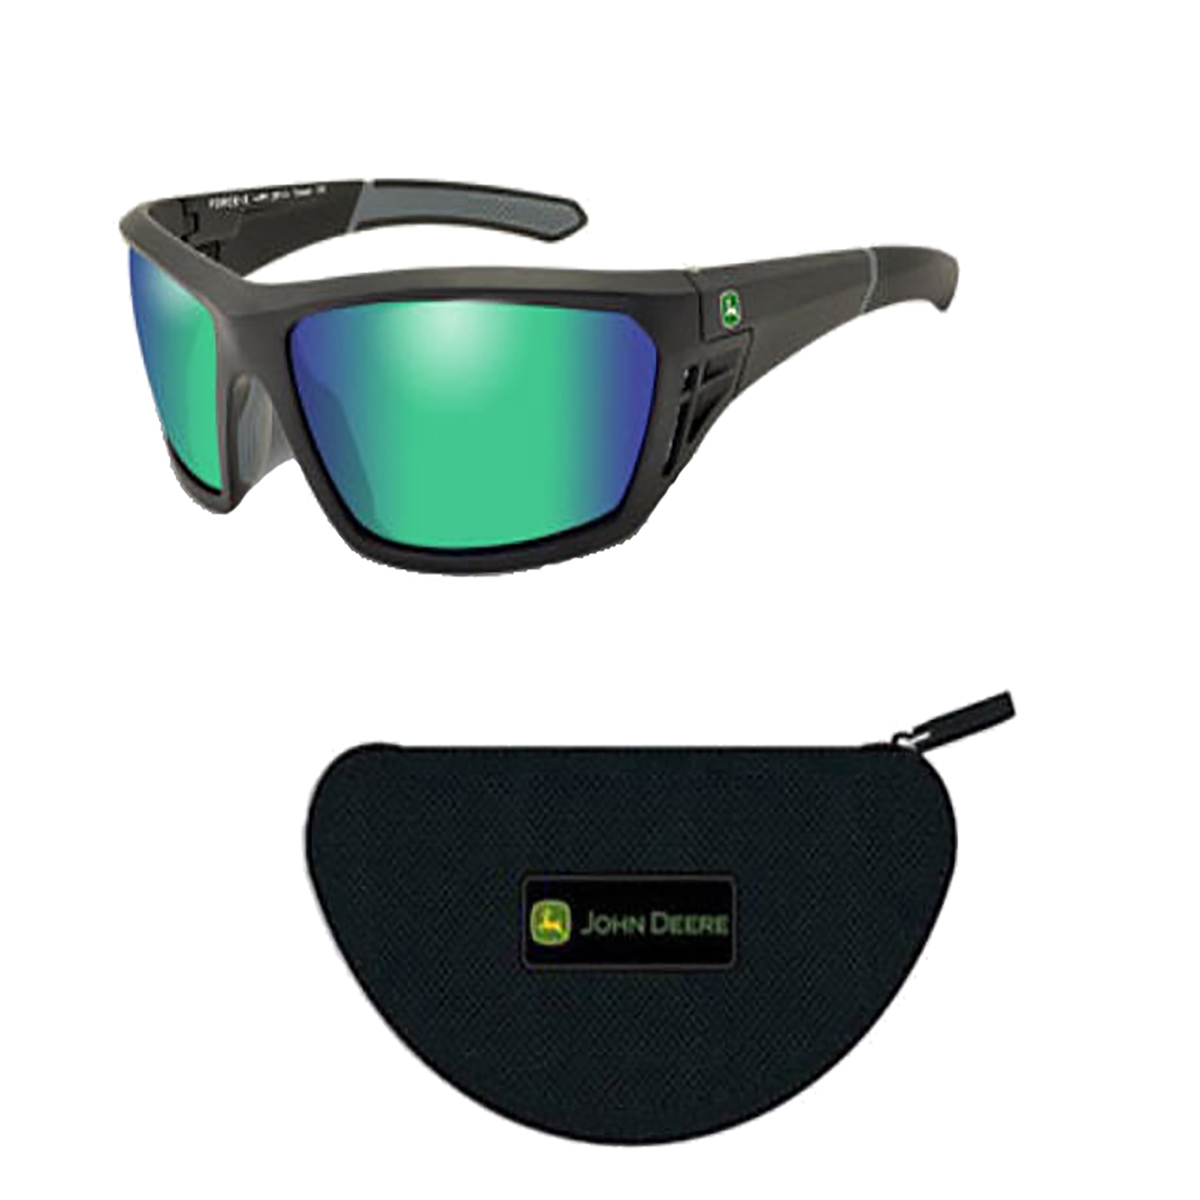 Force-X Premium Safety Sunglasses